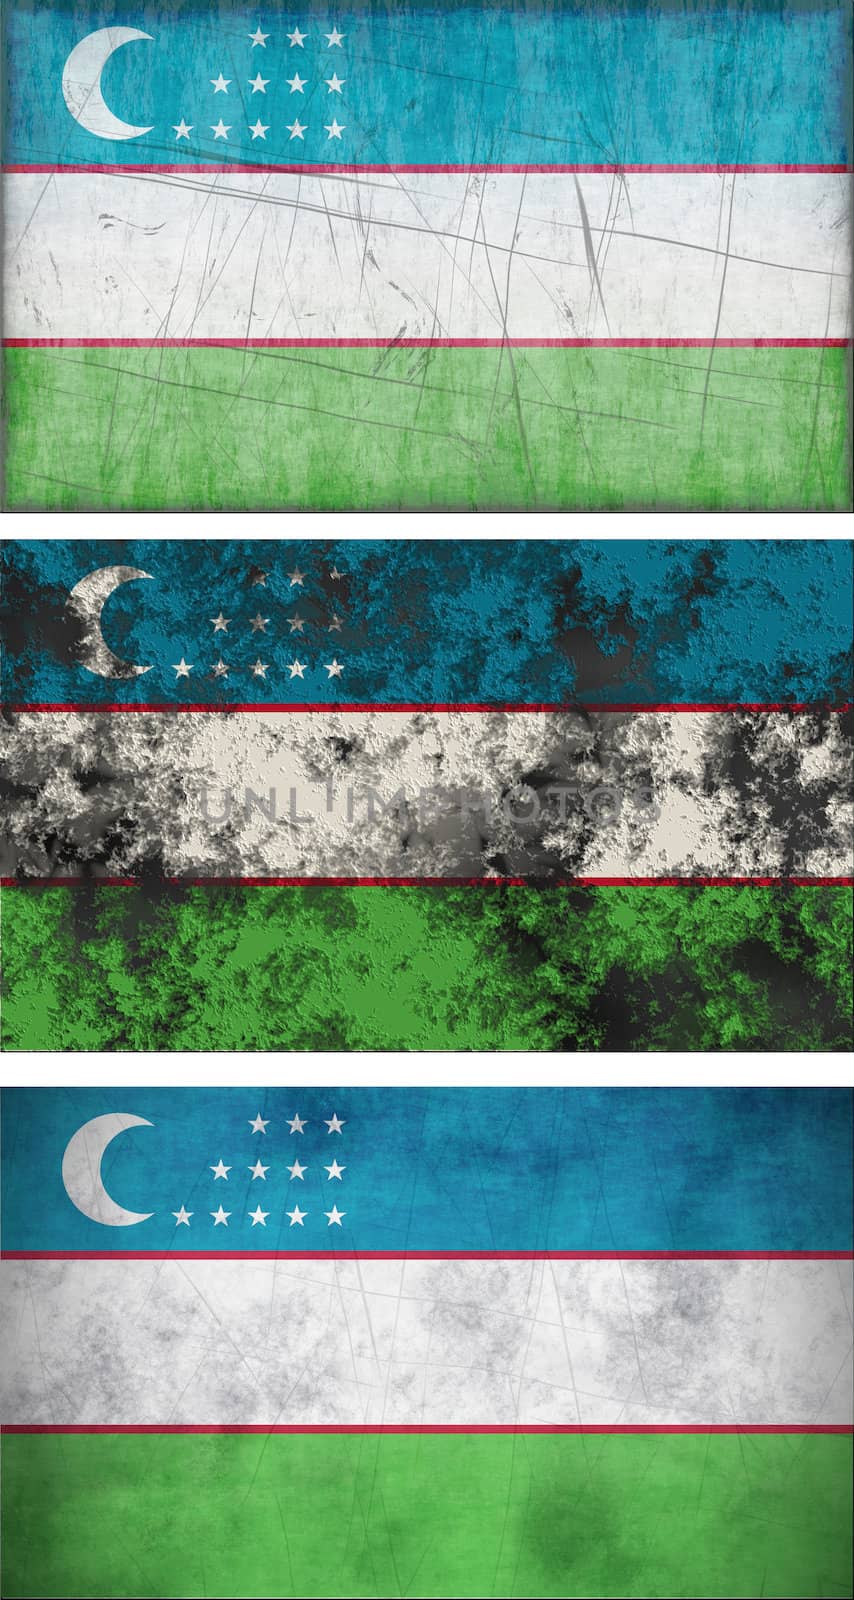 Great Image of the Flag of uzbekistan